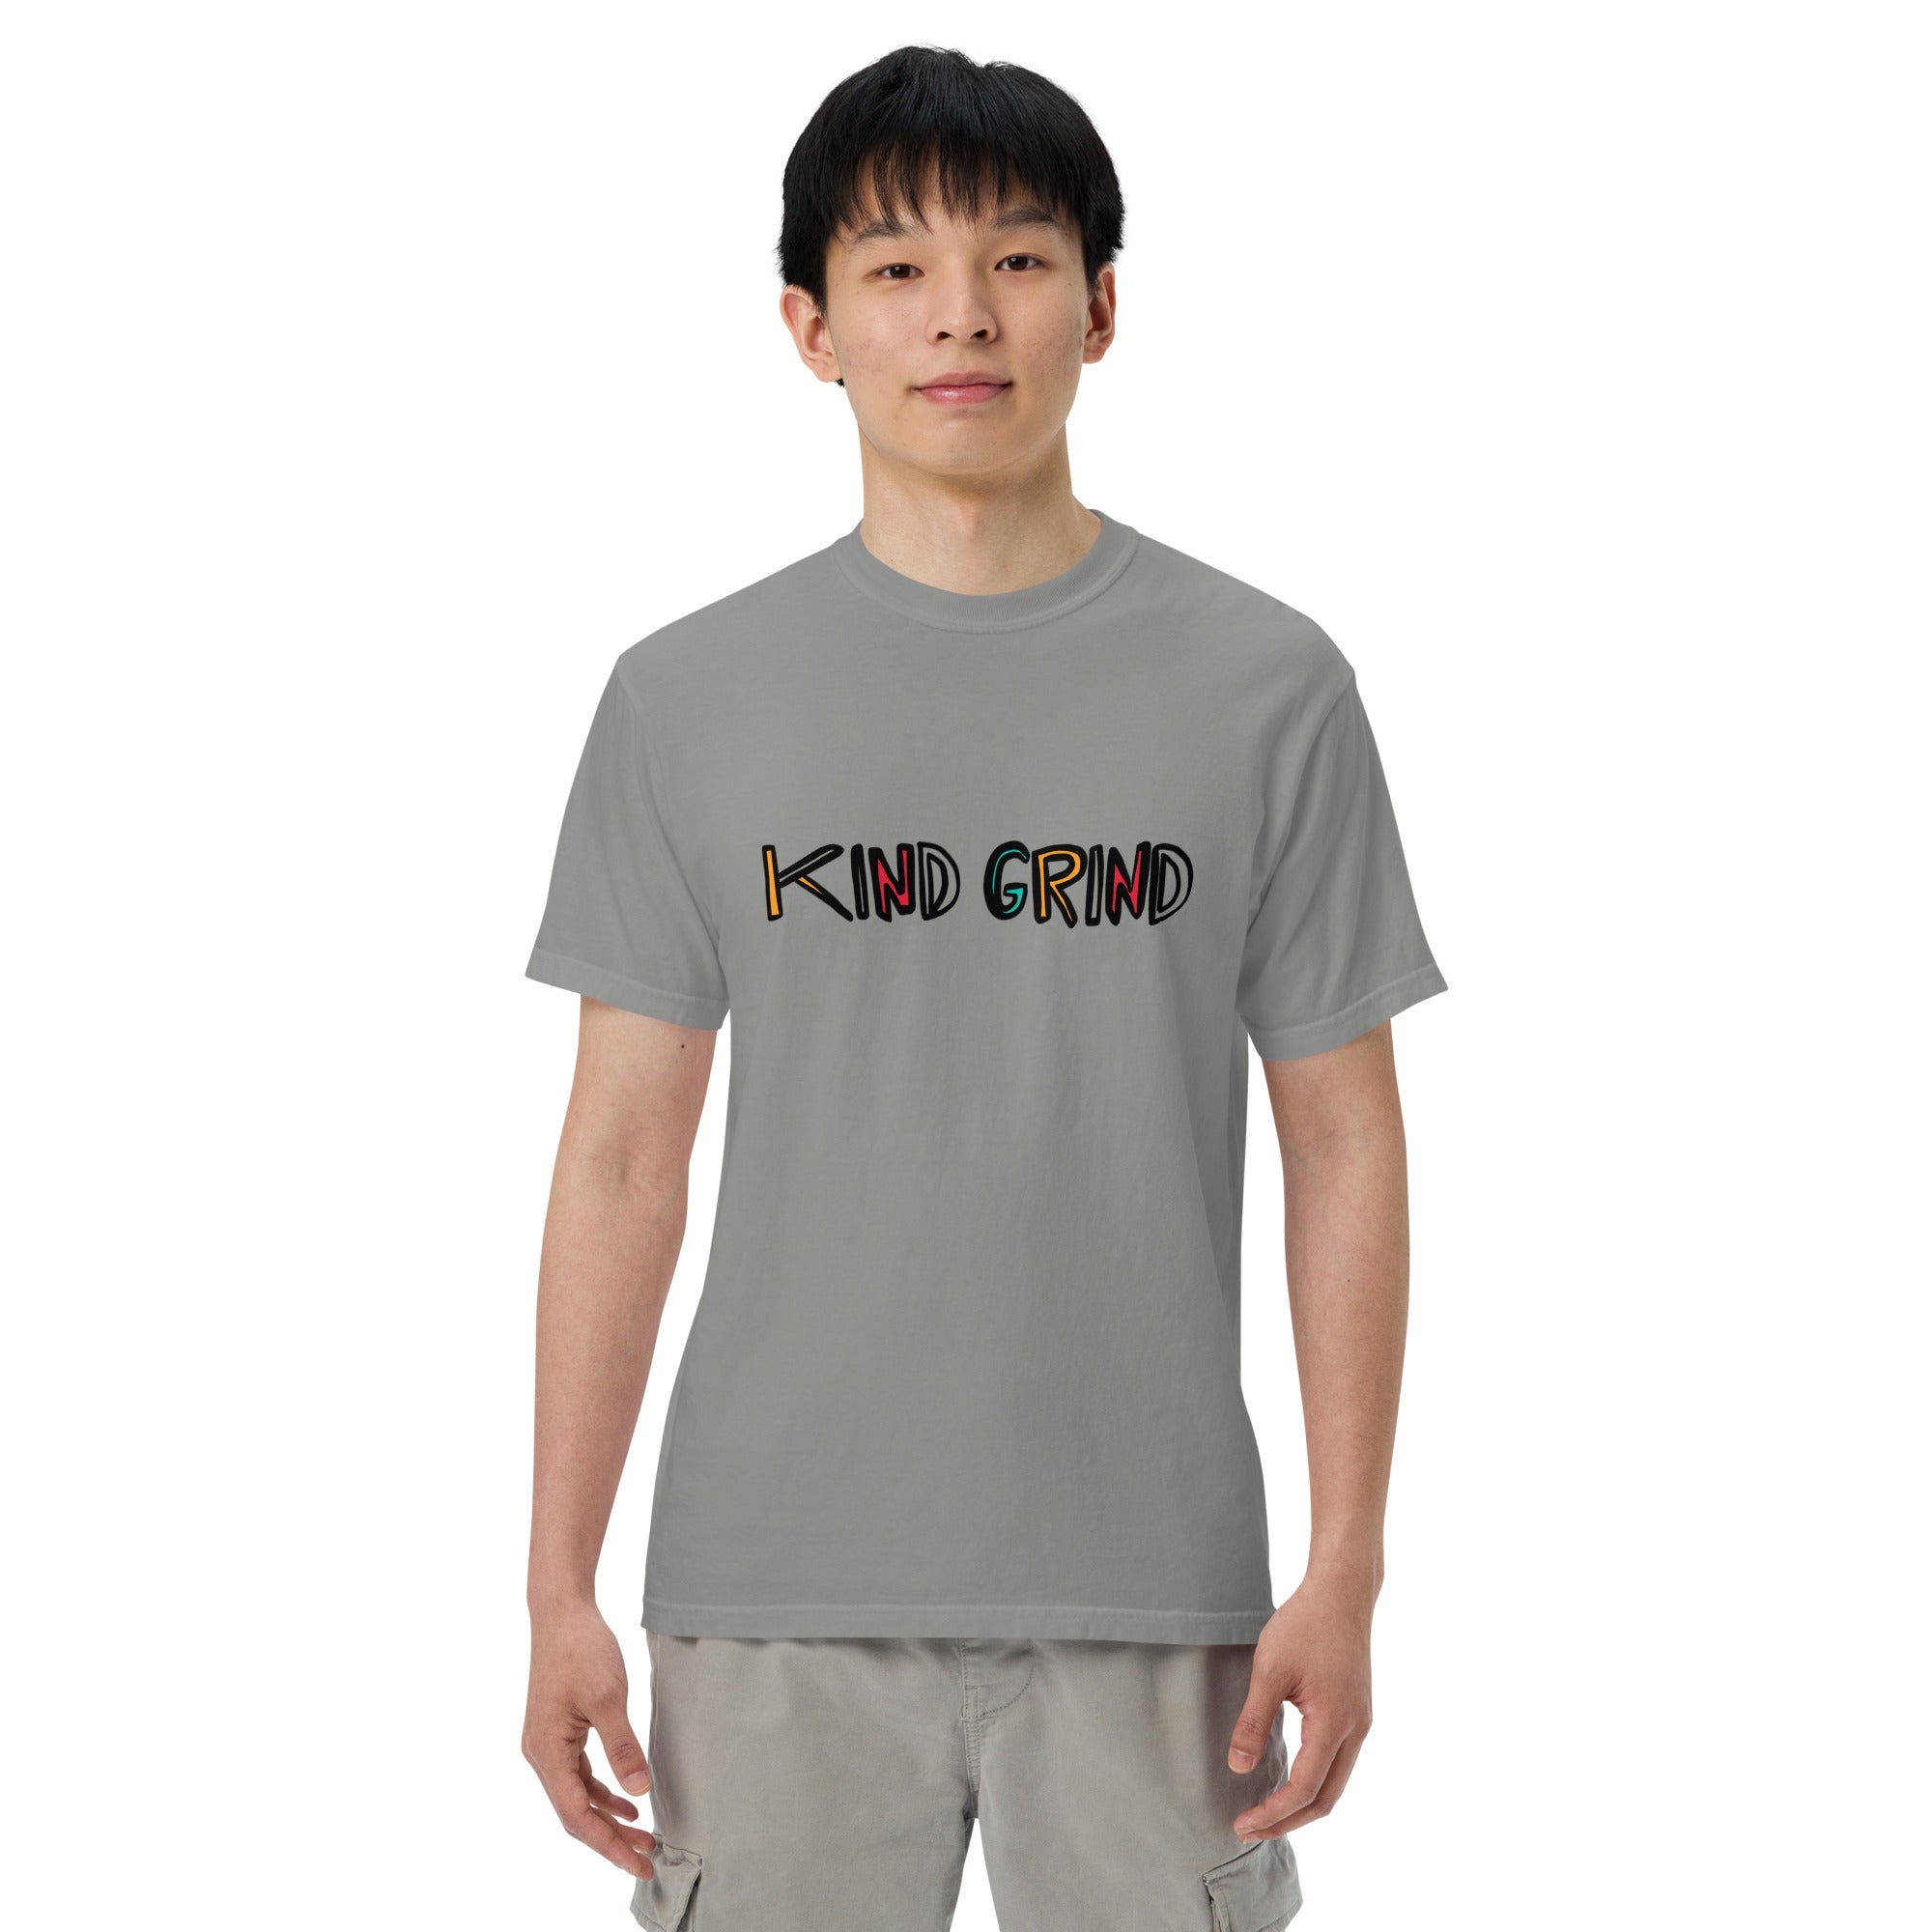 Kind Grind Unisex Comfort Colors T-shirt